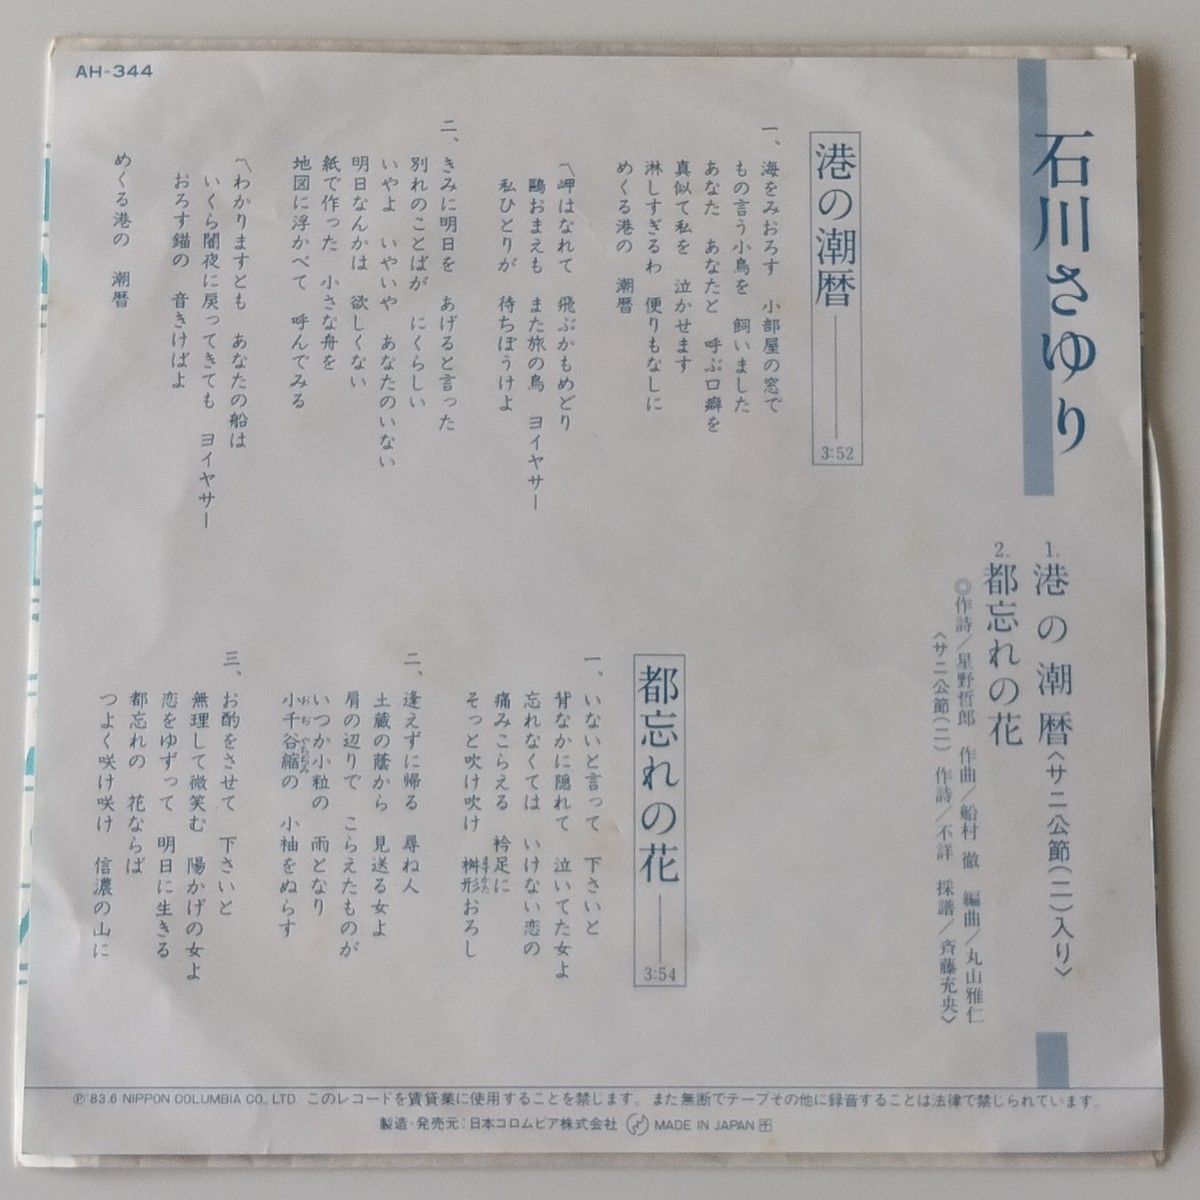 【7inch】石川さゆり / 港の潮暦 (AH-344) 都忘れの花 SAYURI ISHIKAWA / COLUMBIA EP シングルレコード_画像2